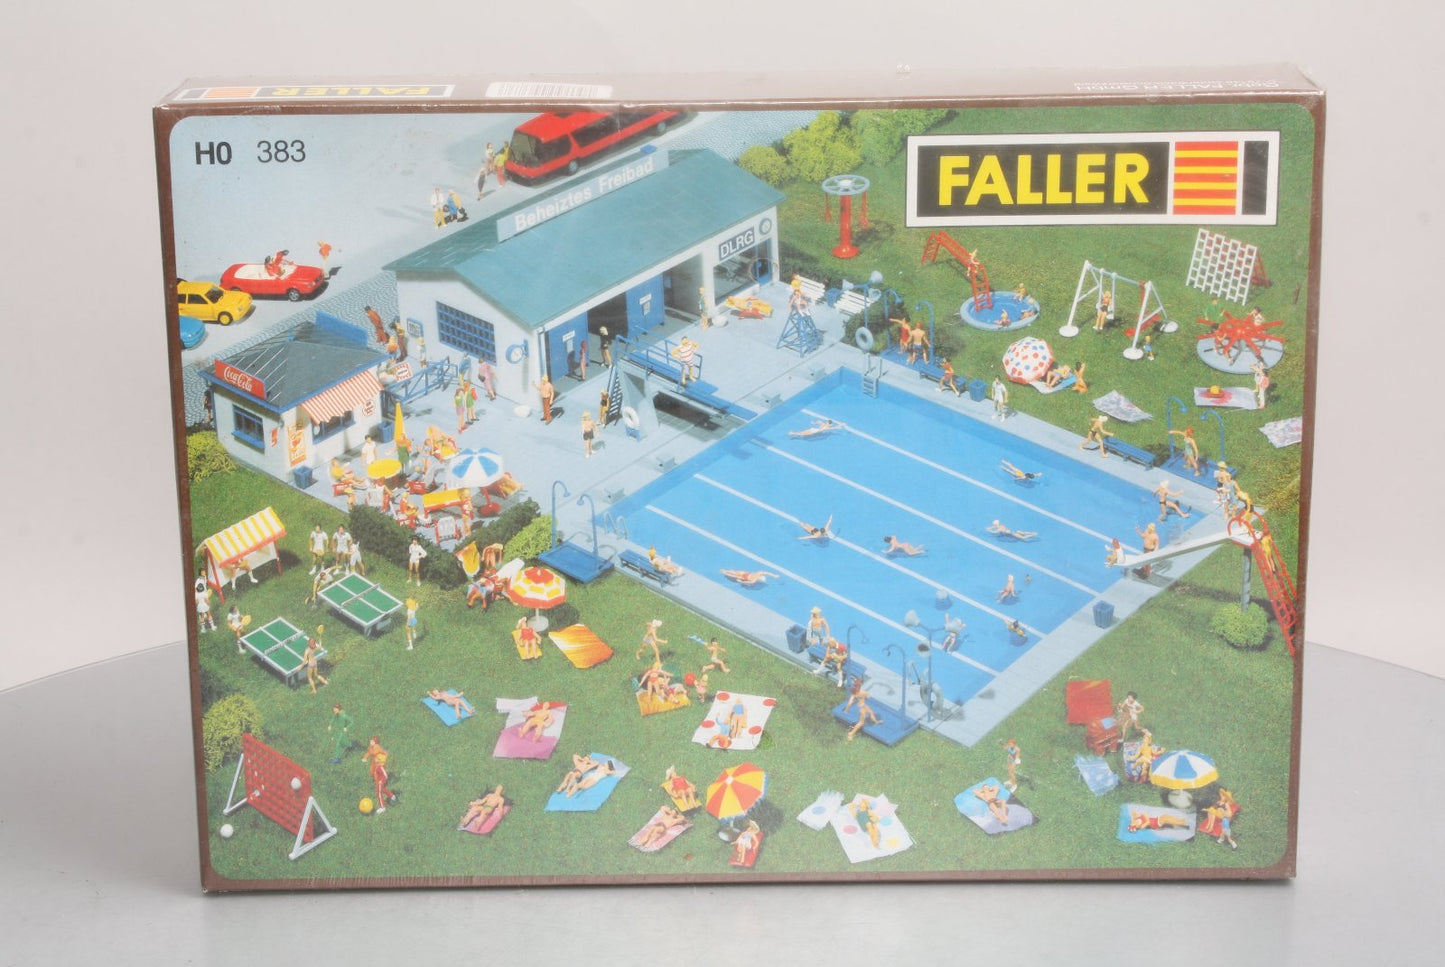 Faller 383 Faller HO Scale Functioning Swimming Pool Plastic Building Kit